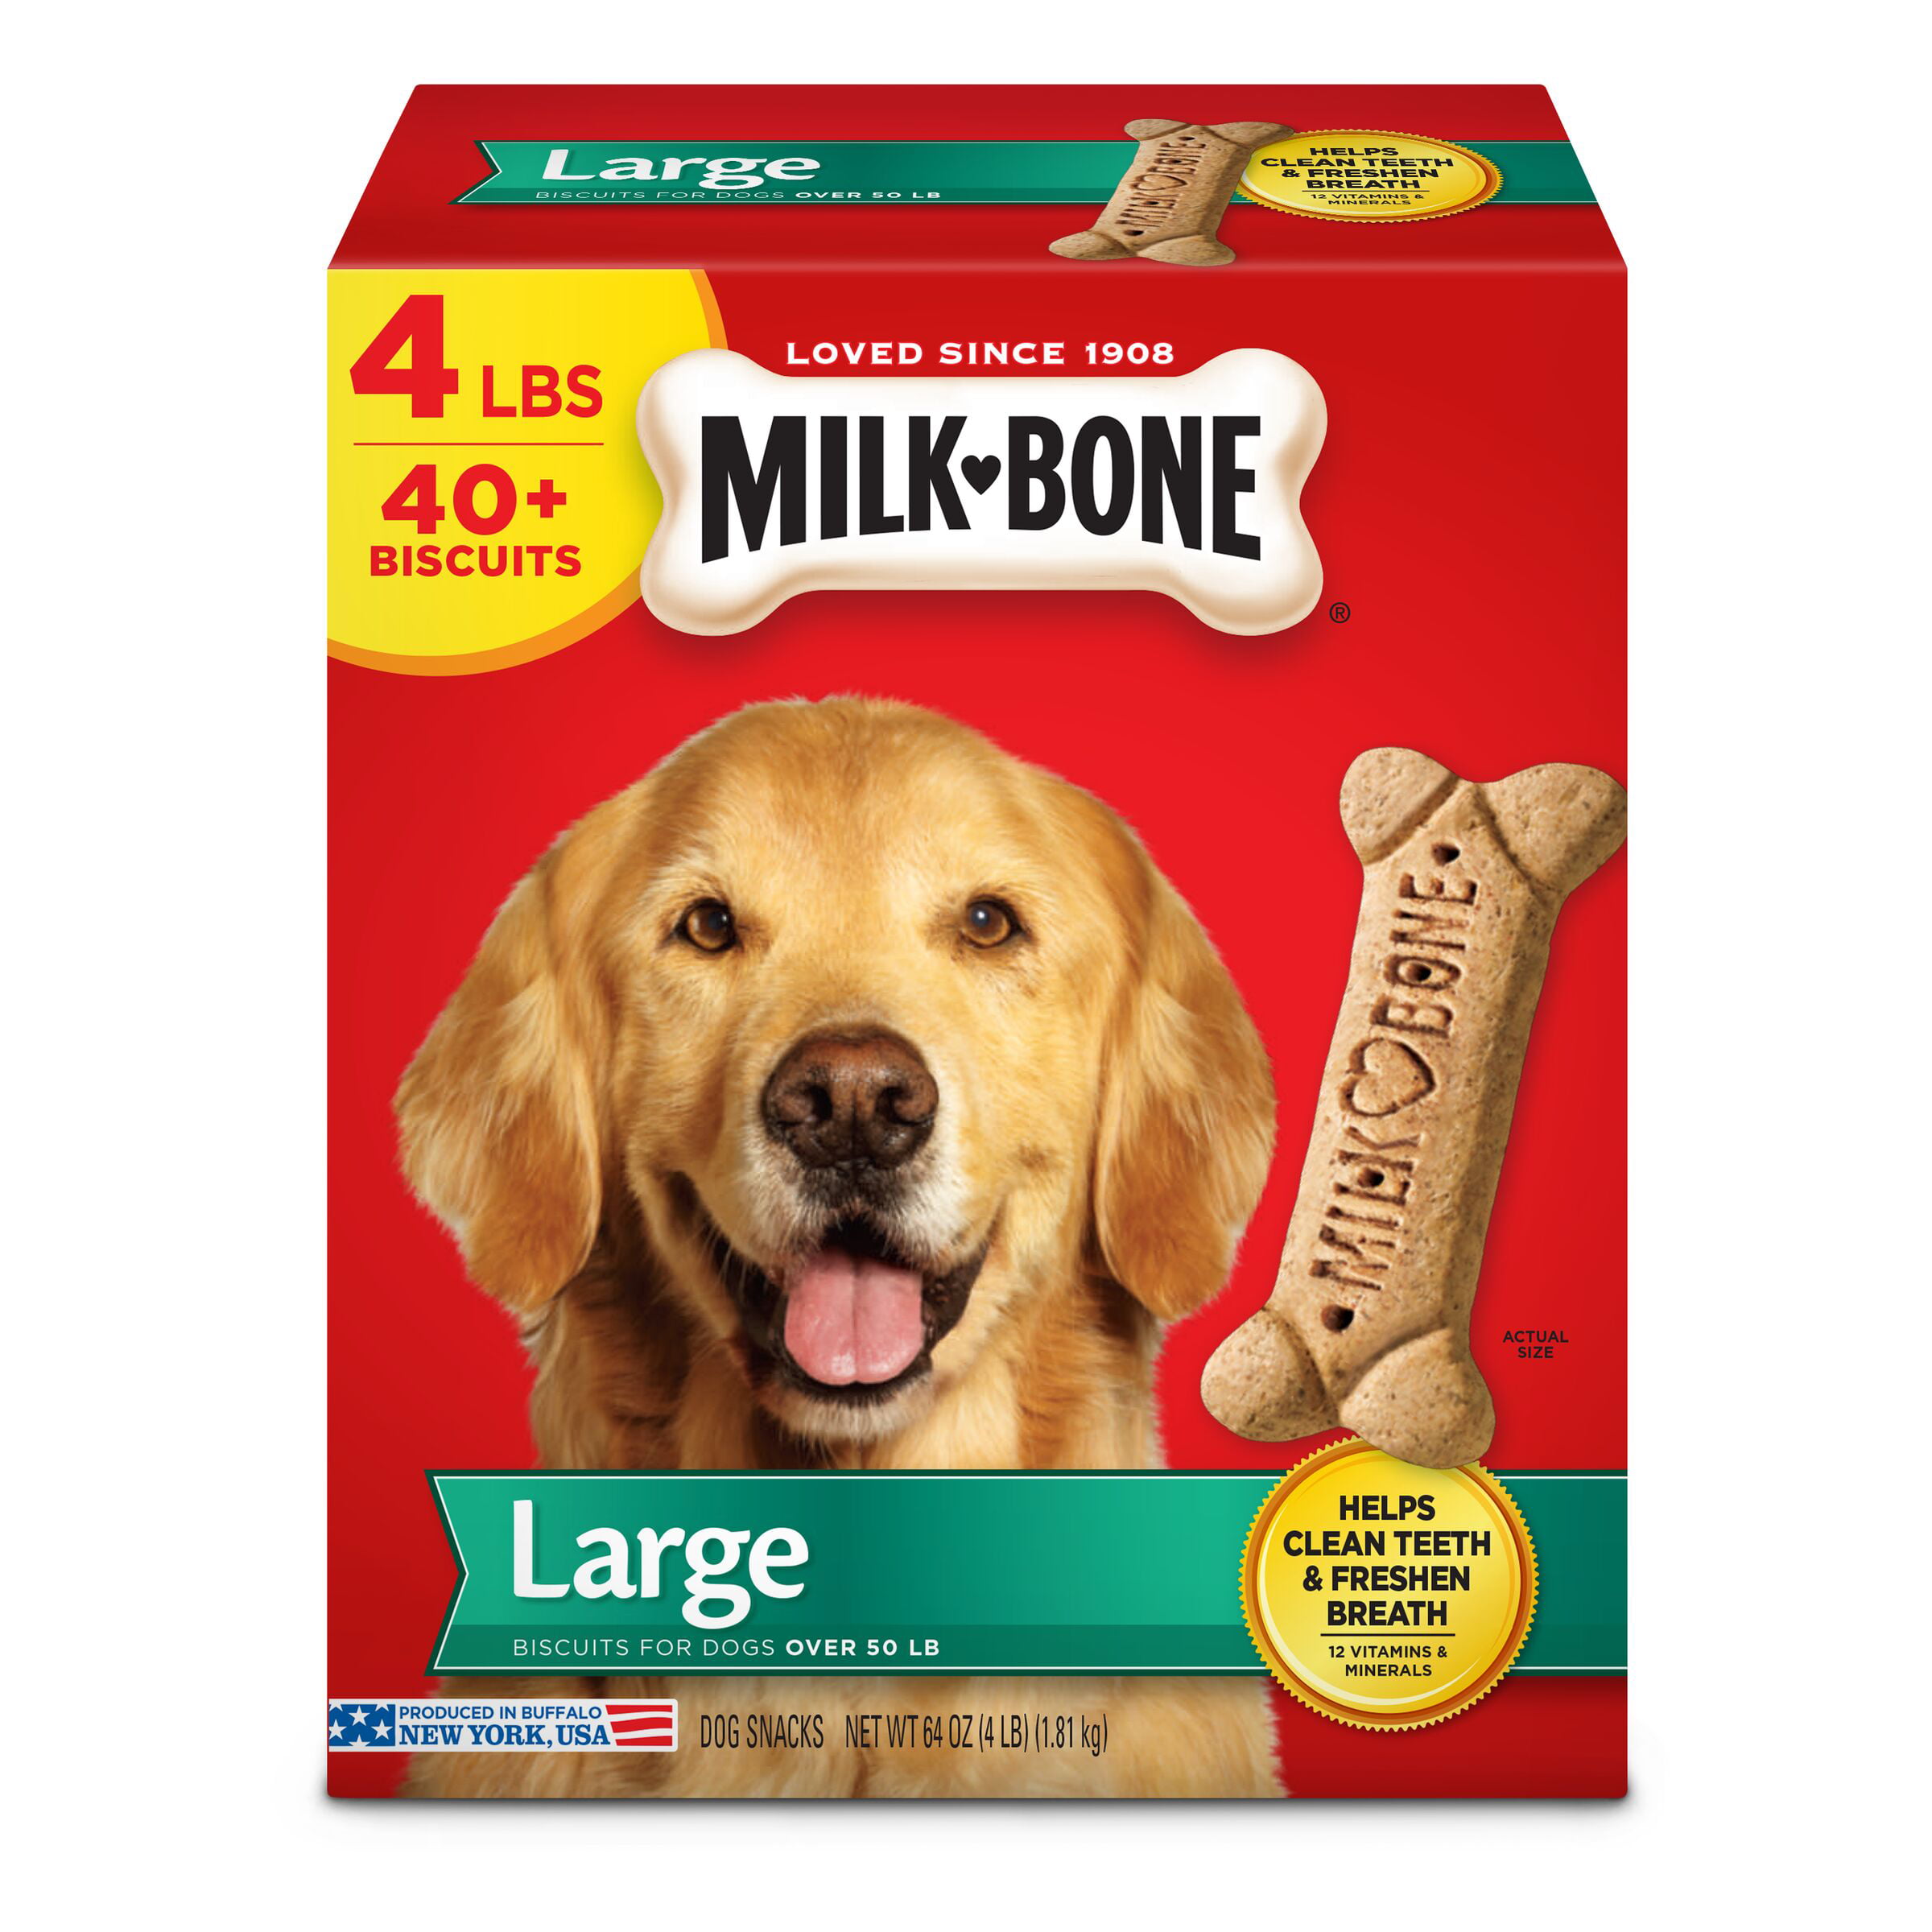 milk bone 10 lb walmart